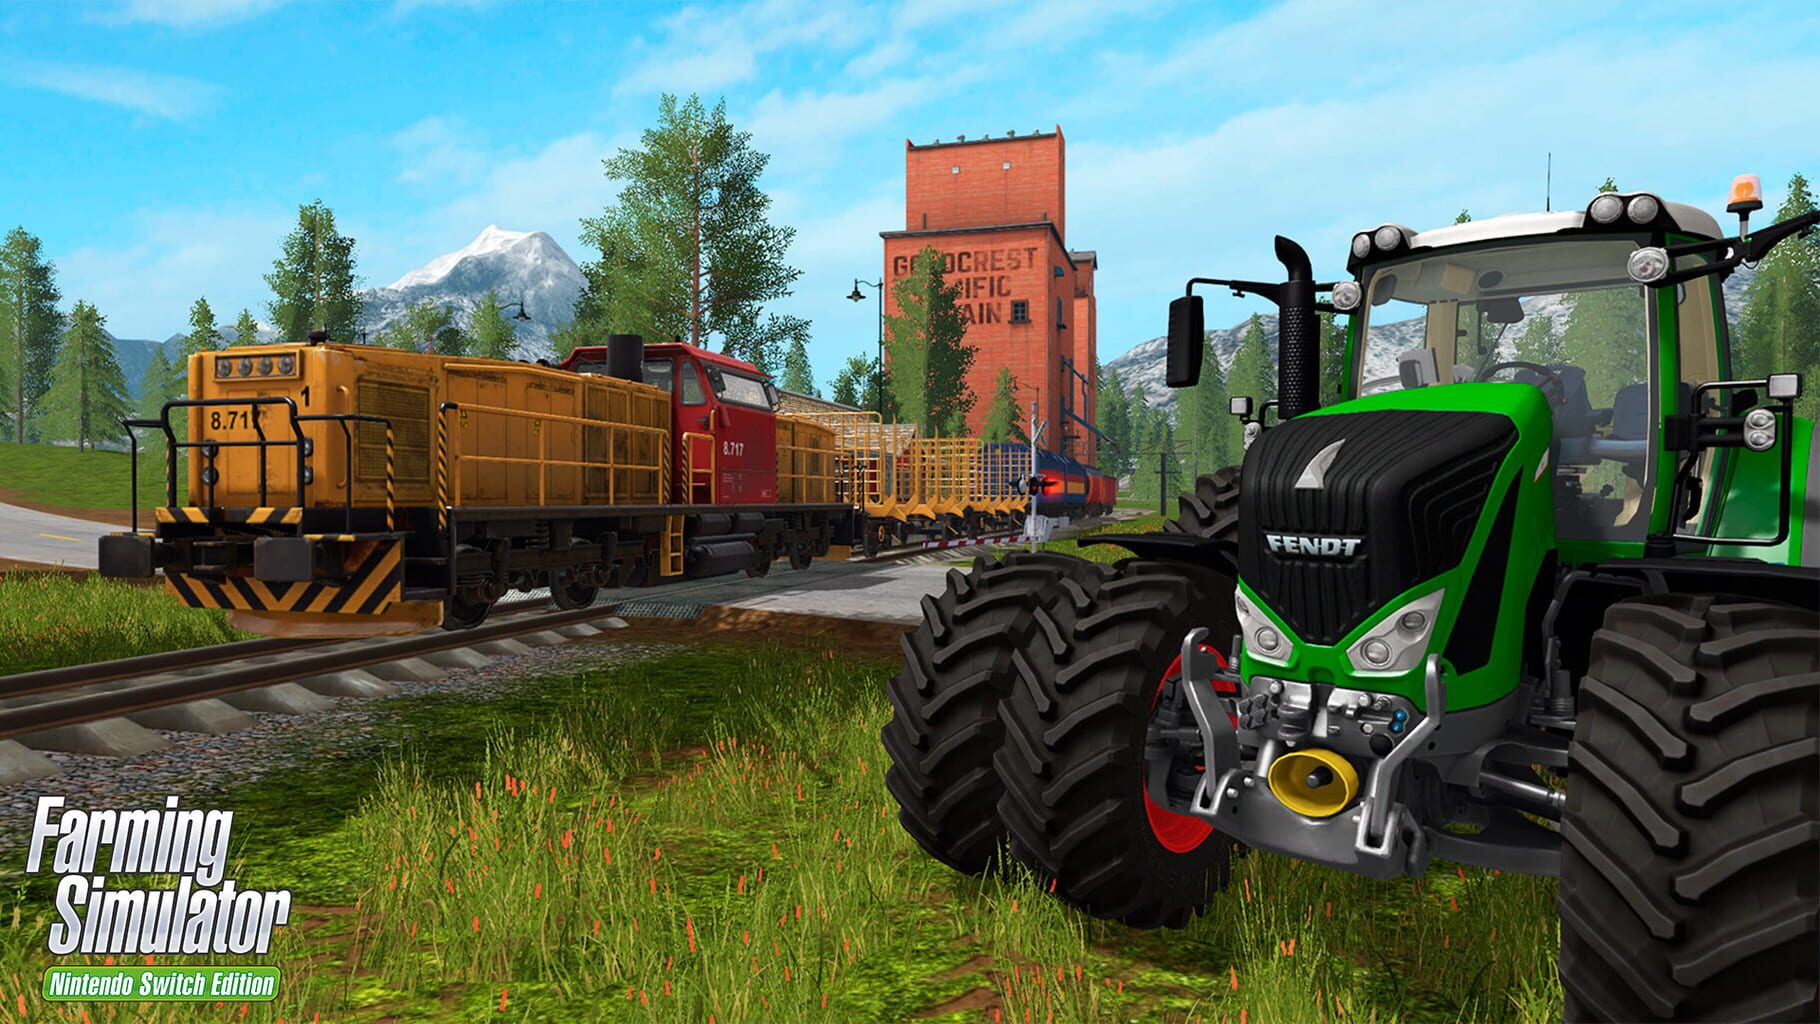 Farming Simulator: Nintendo Switch Edition screenshot